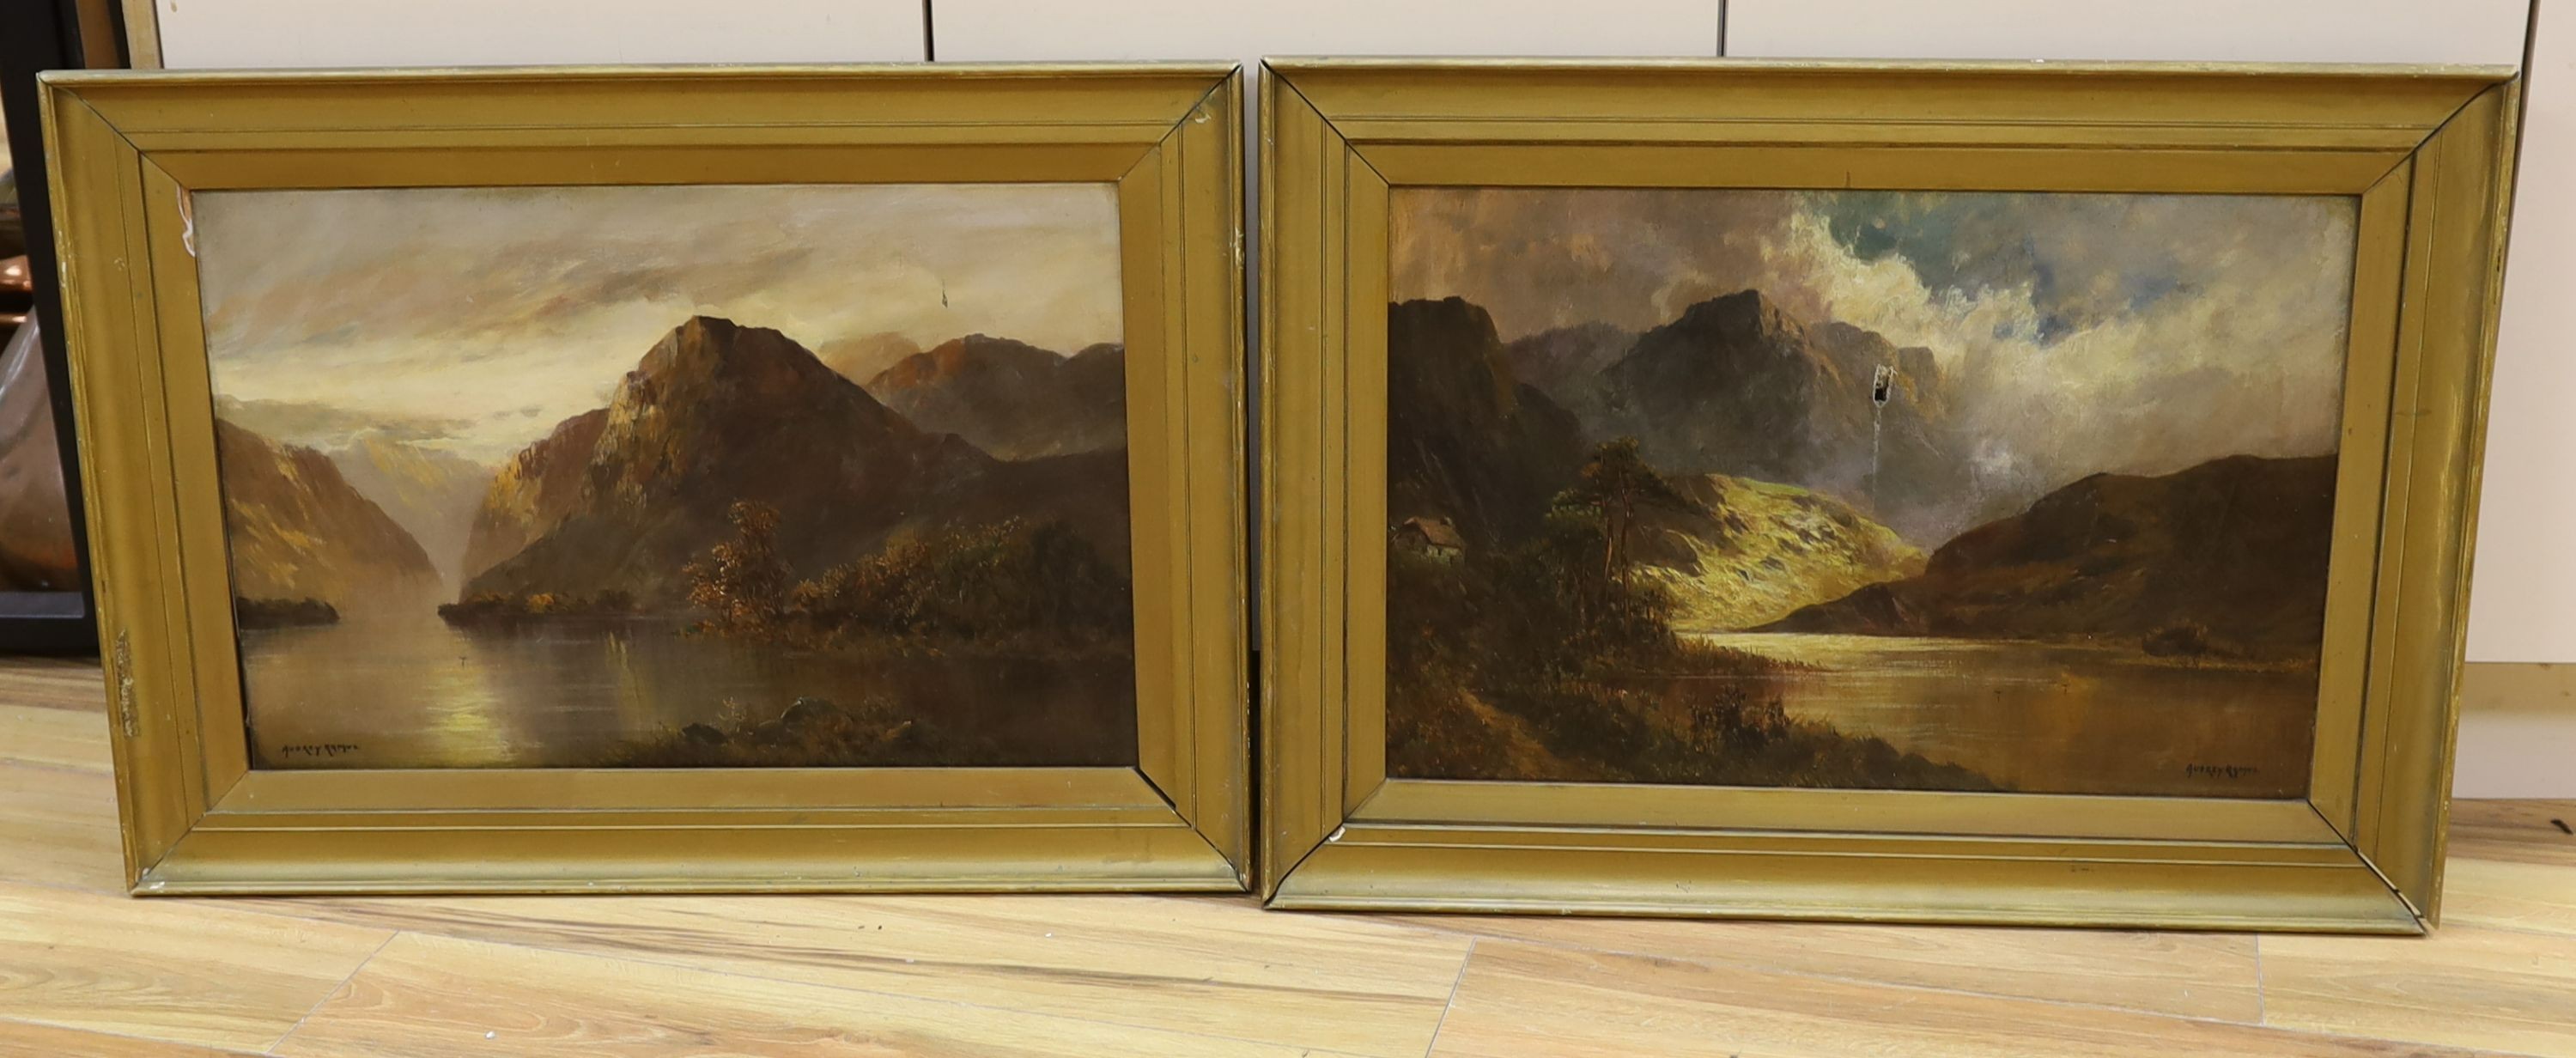 Aubrey Ramus (1895-1950), pair of oils on canvas, Loch scenes, signed, 40 x 60cm (one a.f.)